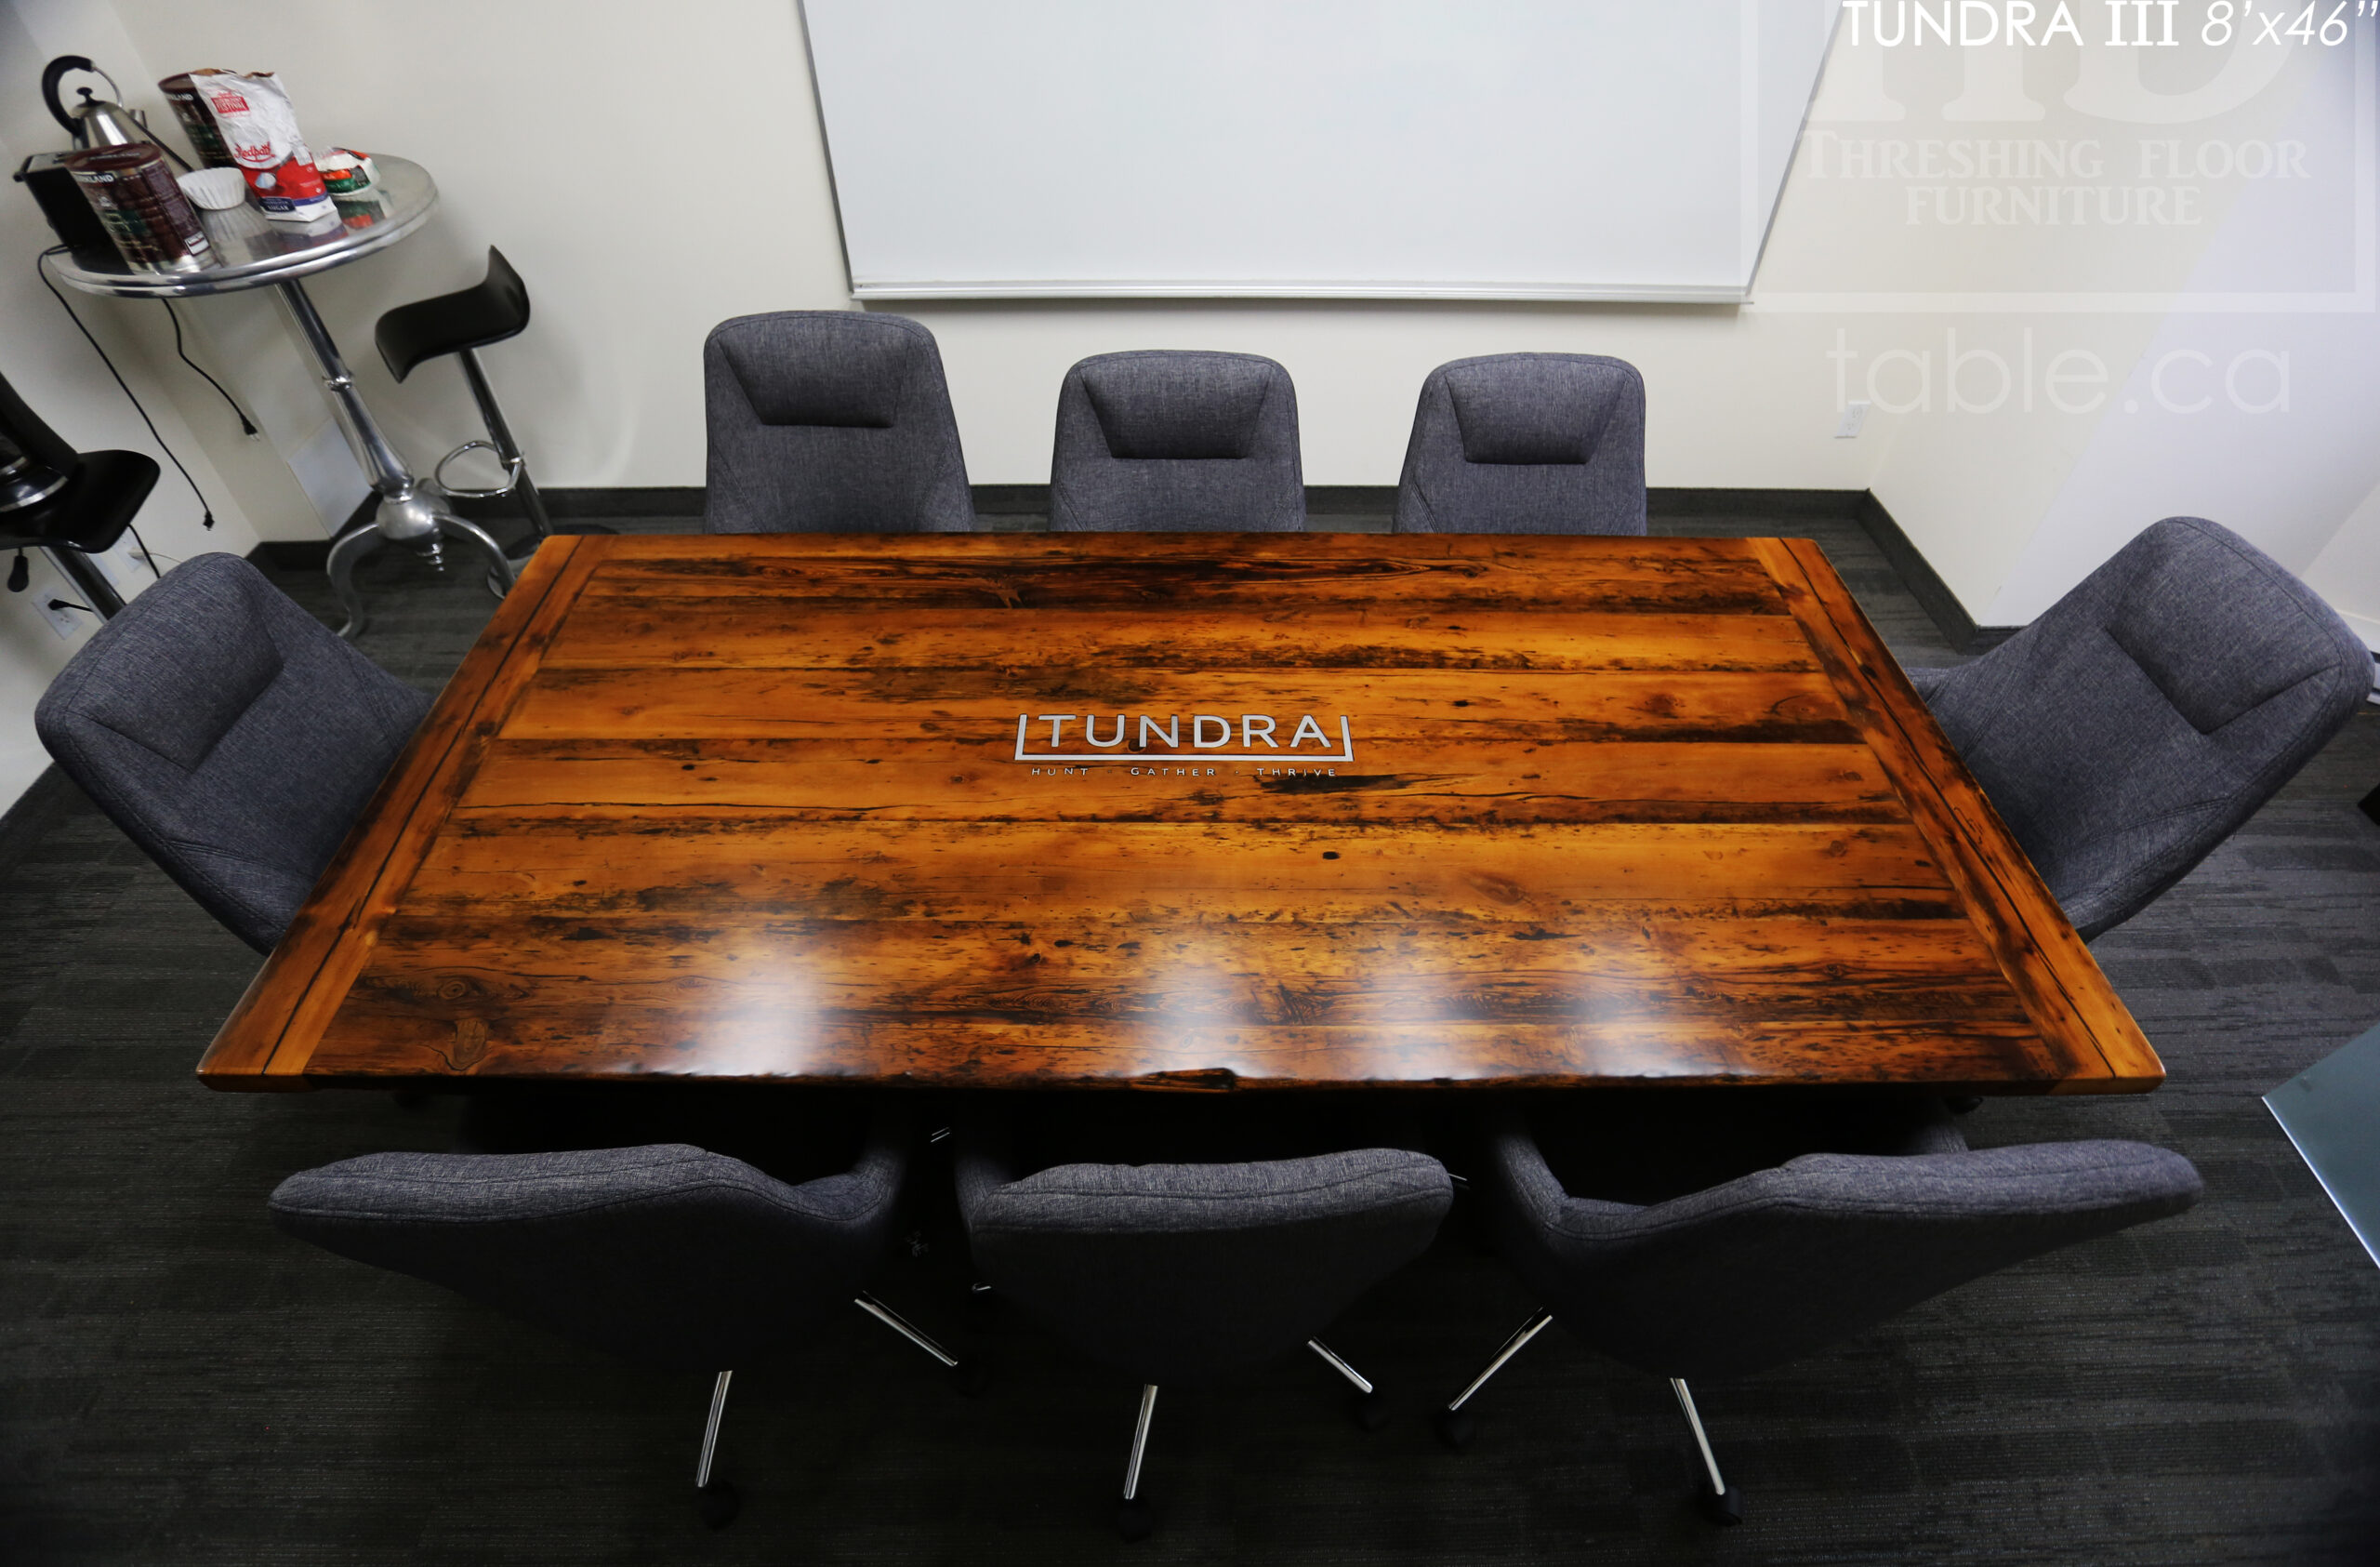 Ontario Boardroom Table made from Ontario Barnwood custom made by HD Threshing Floor Furniture / www.table.ca